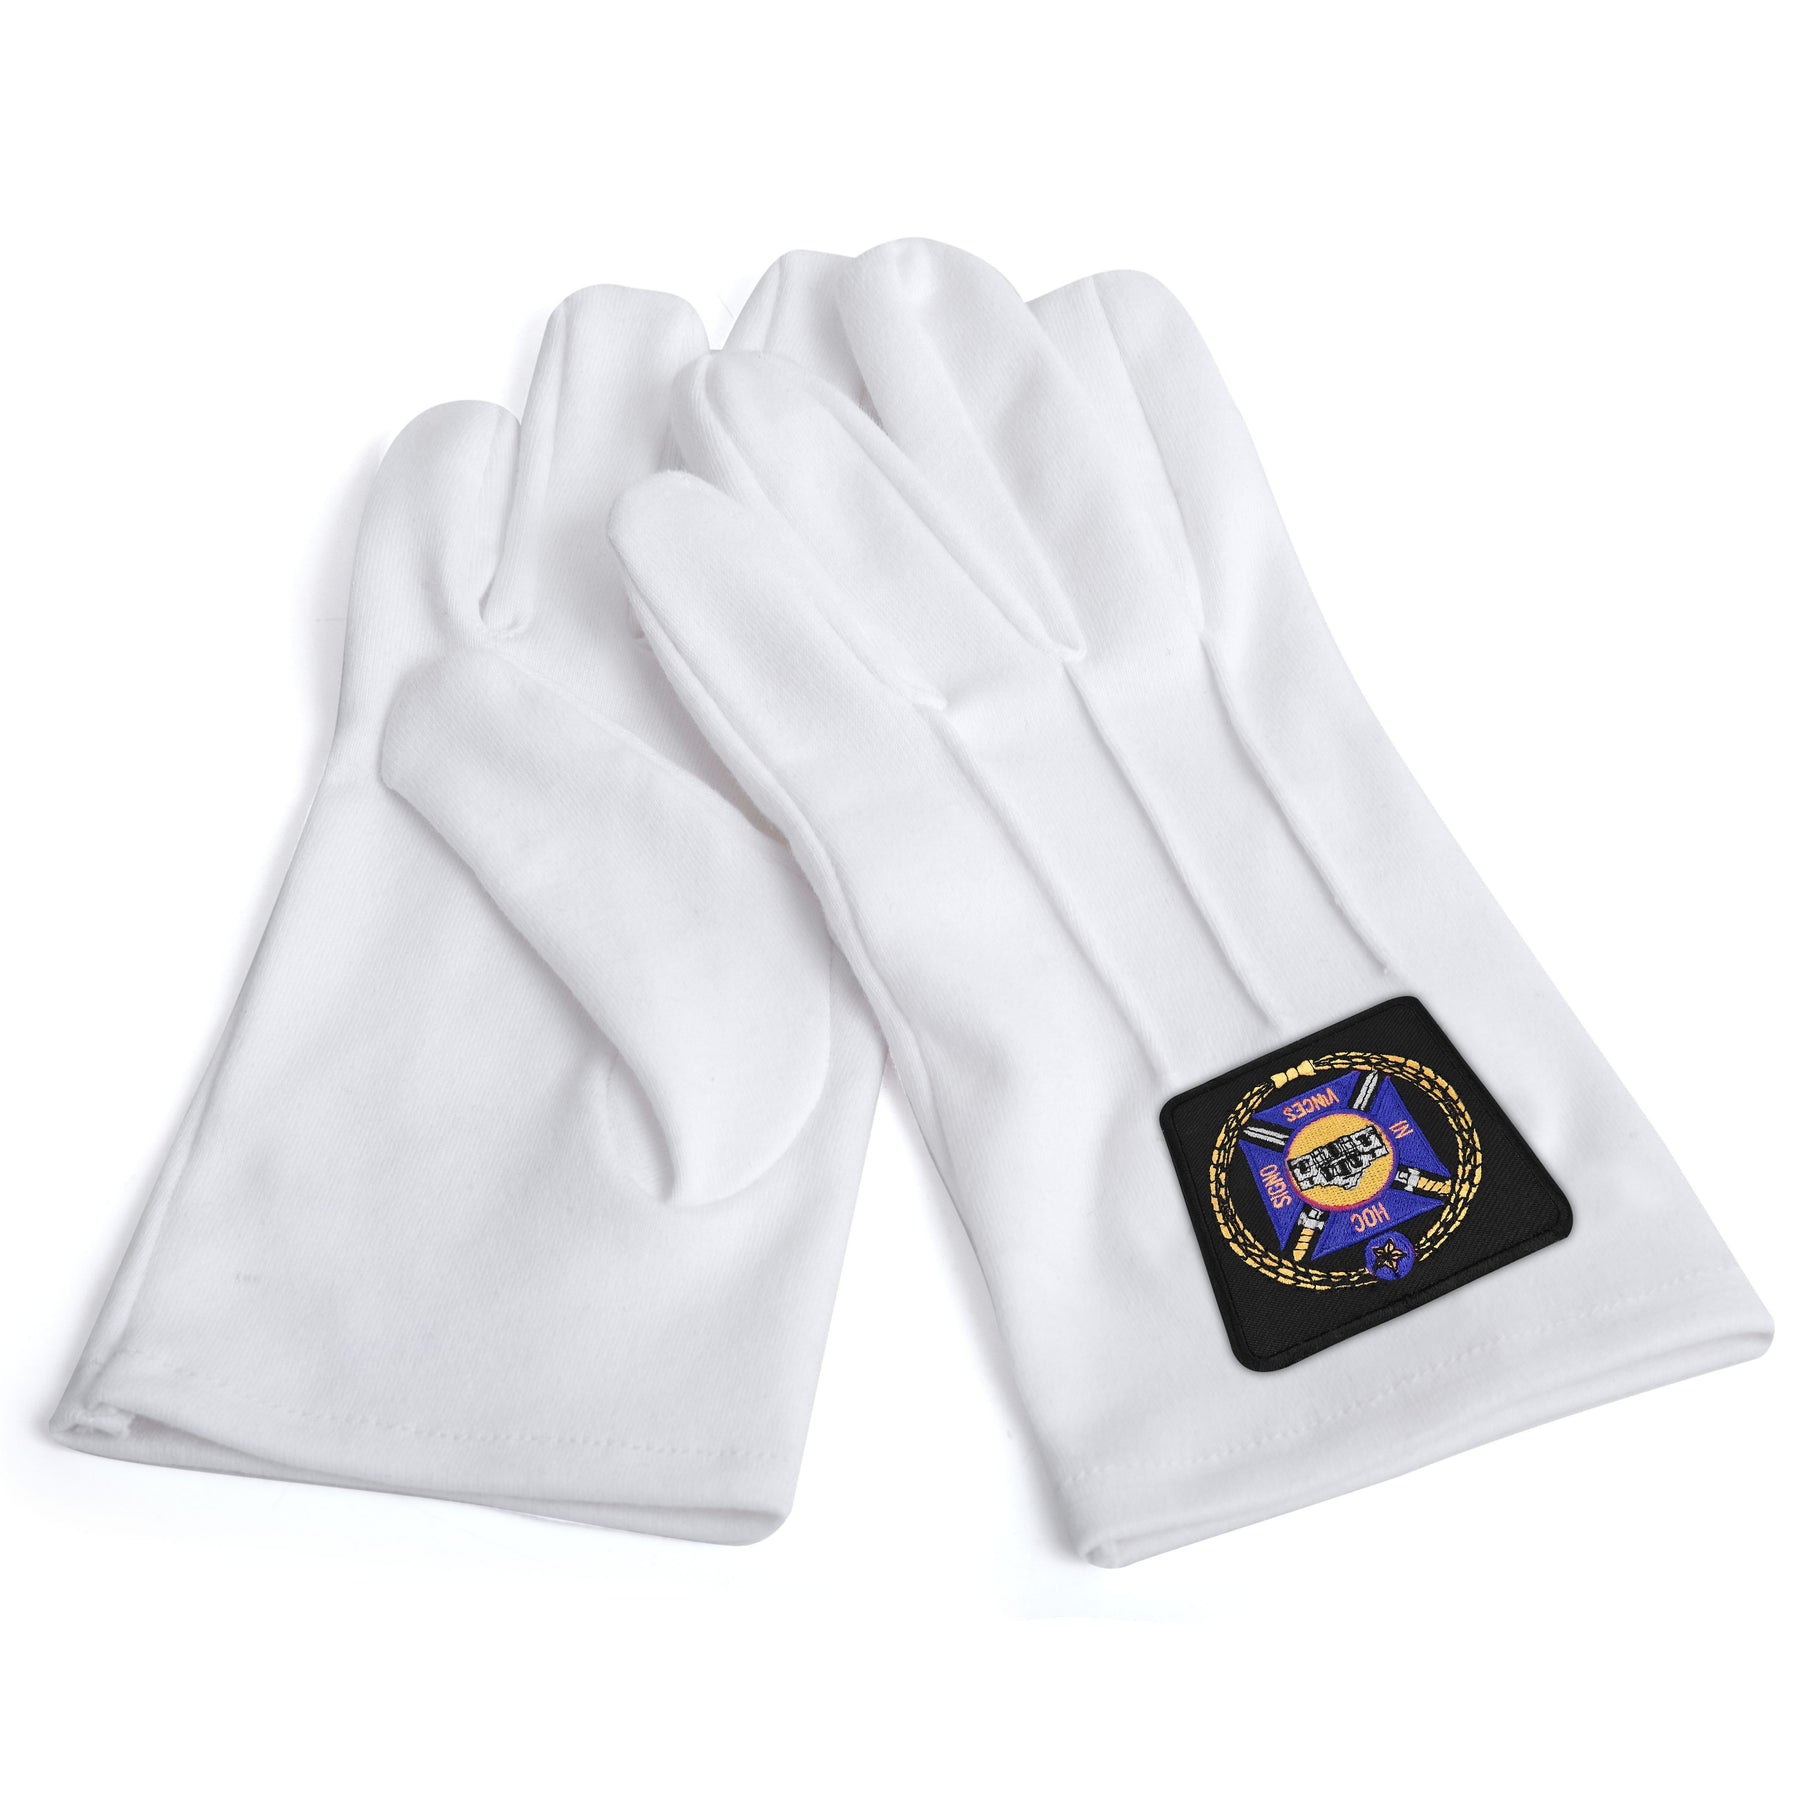 Knights Templar Commandery Glove - White Cotton With Black Patch - Bricks Masons